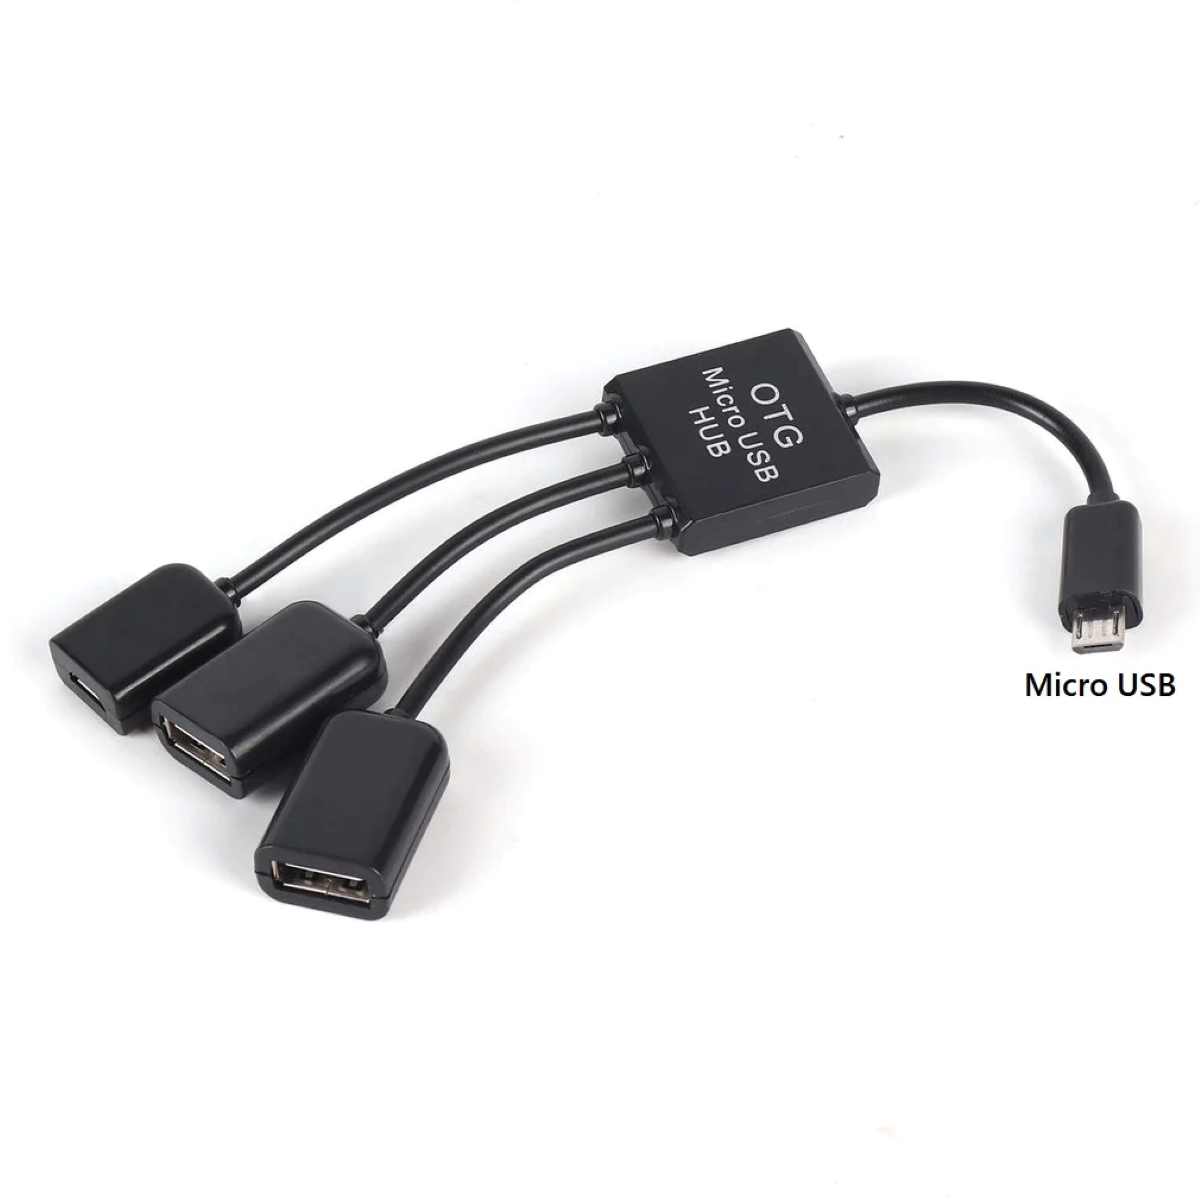 What Is A Micro USB Hub